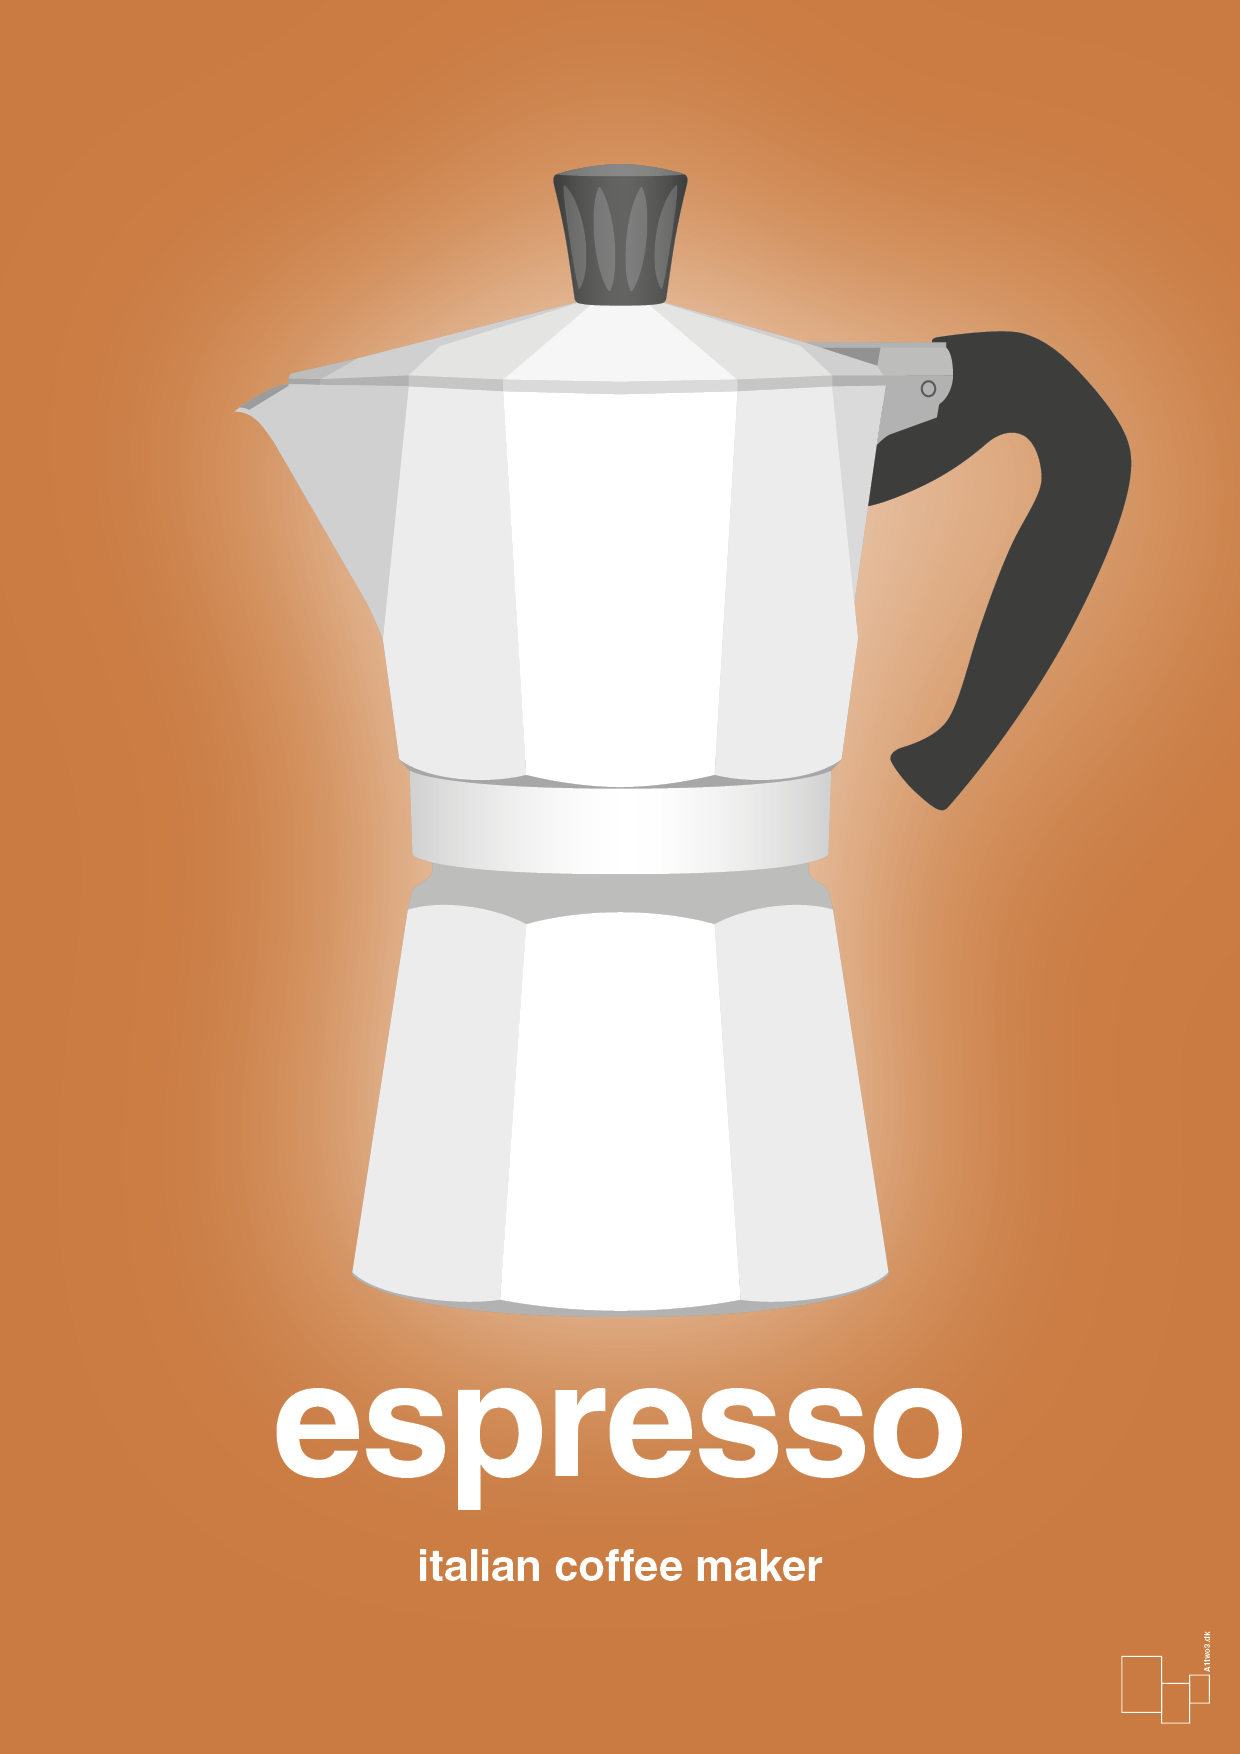 espresso - italian coffee maker - Plakat med Mad & Drikke i Rumba Orange